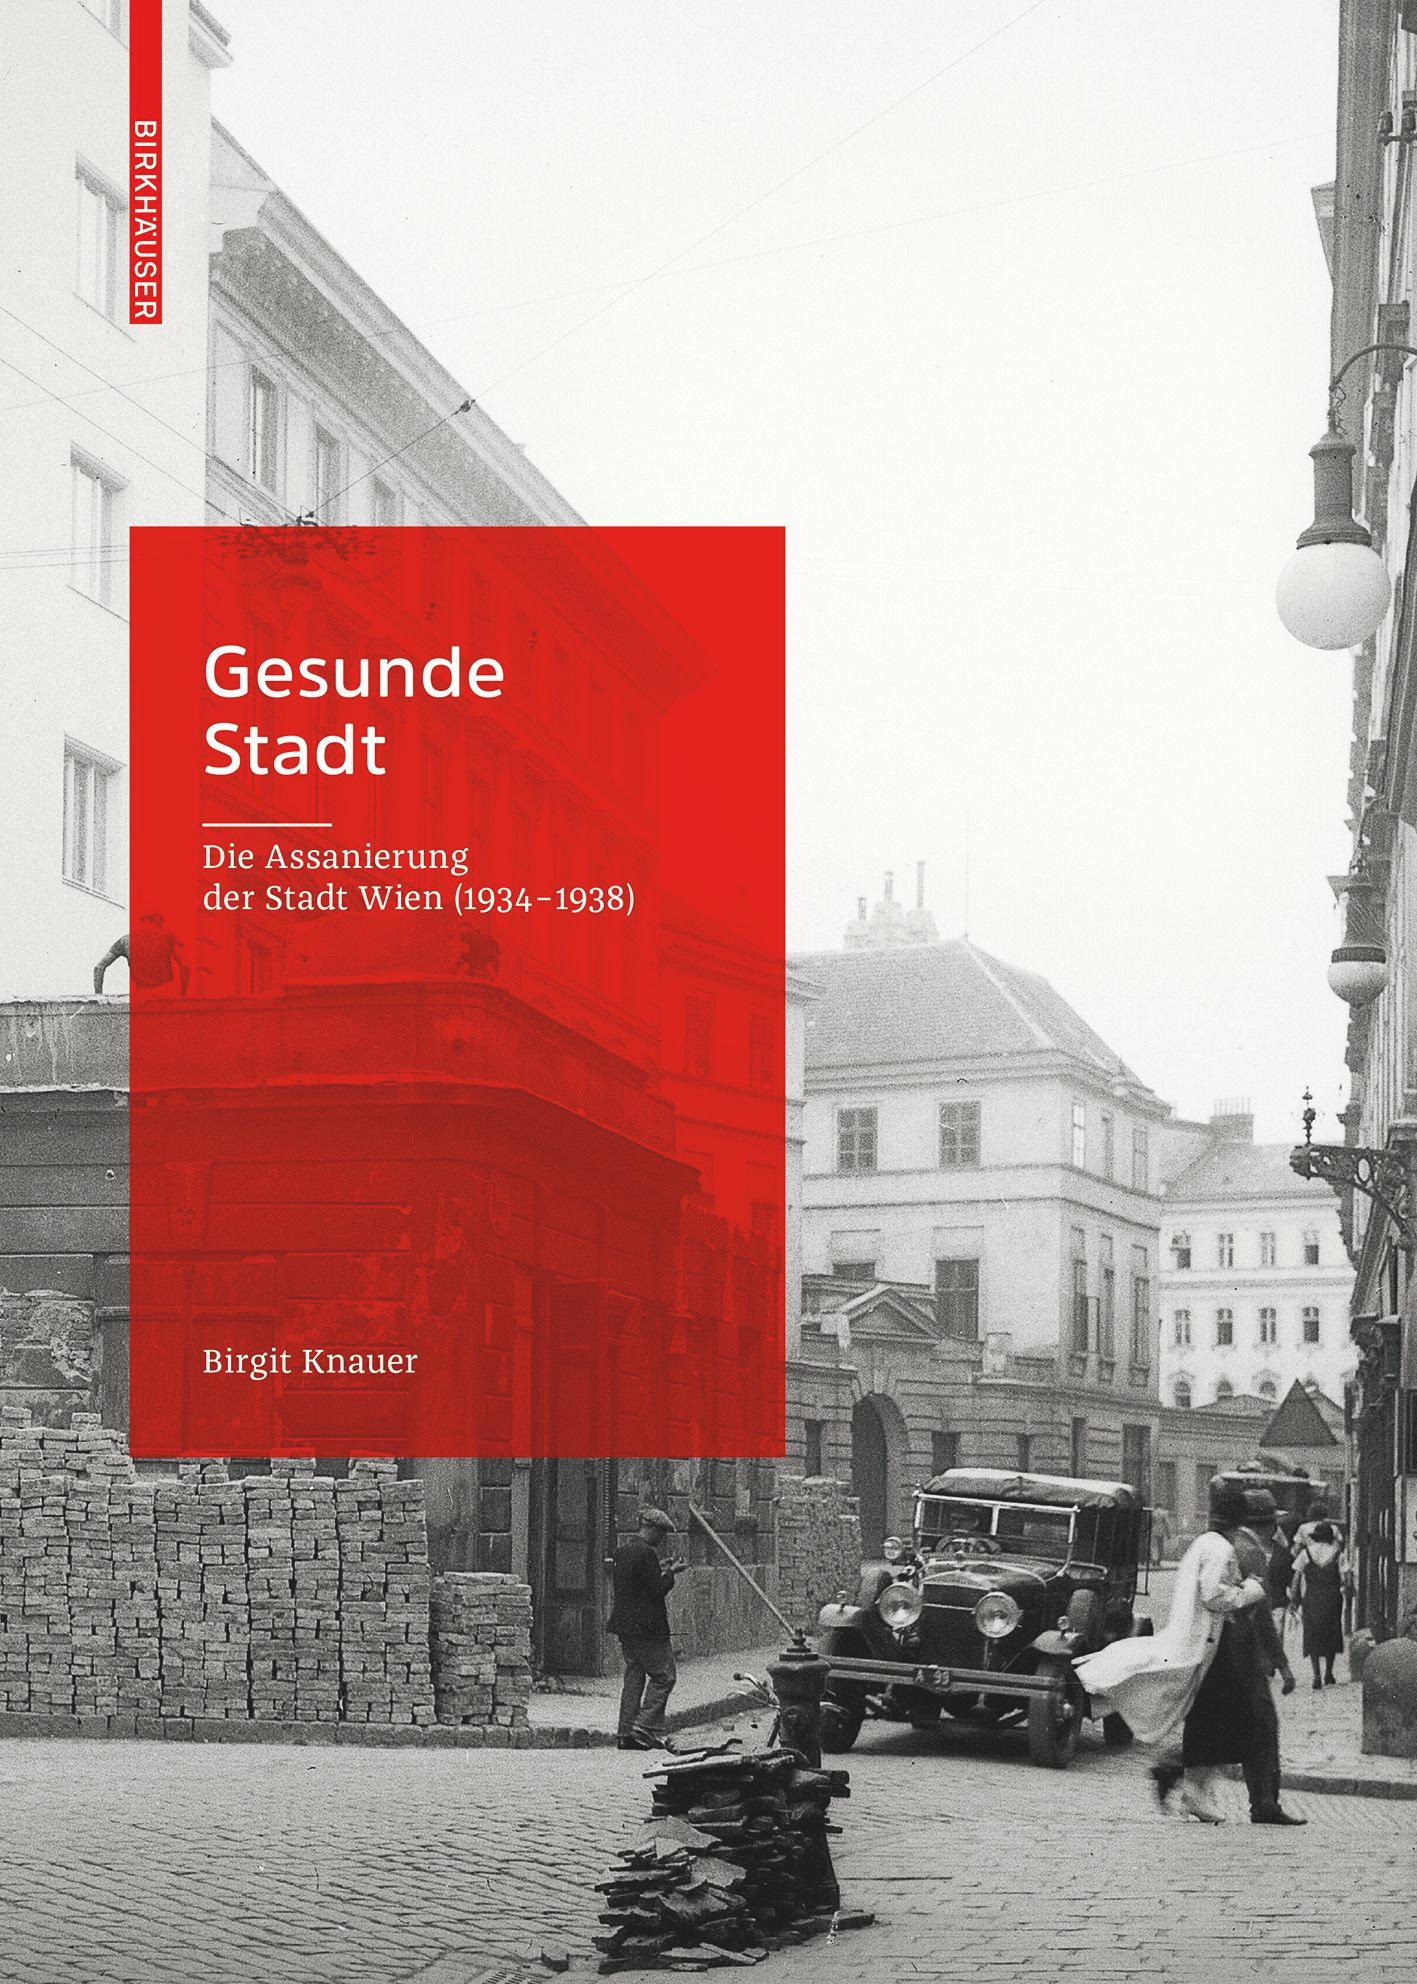 Gesunde Stadt's cover